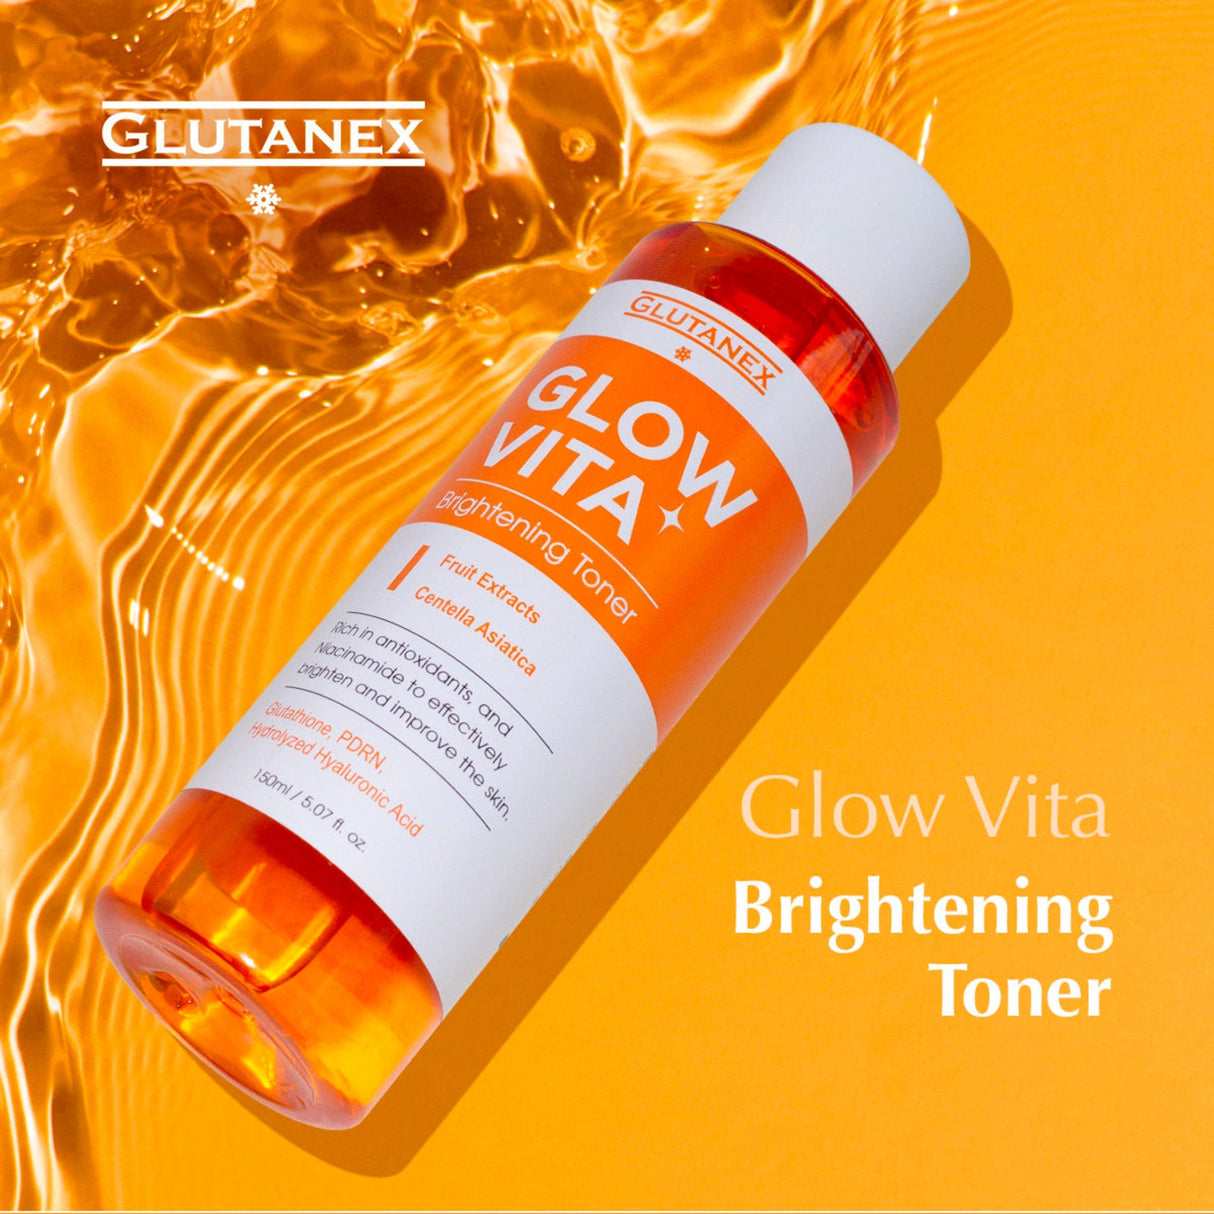 Glow Vita Brightening Toner - GLUTANEX USA